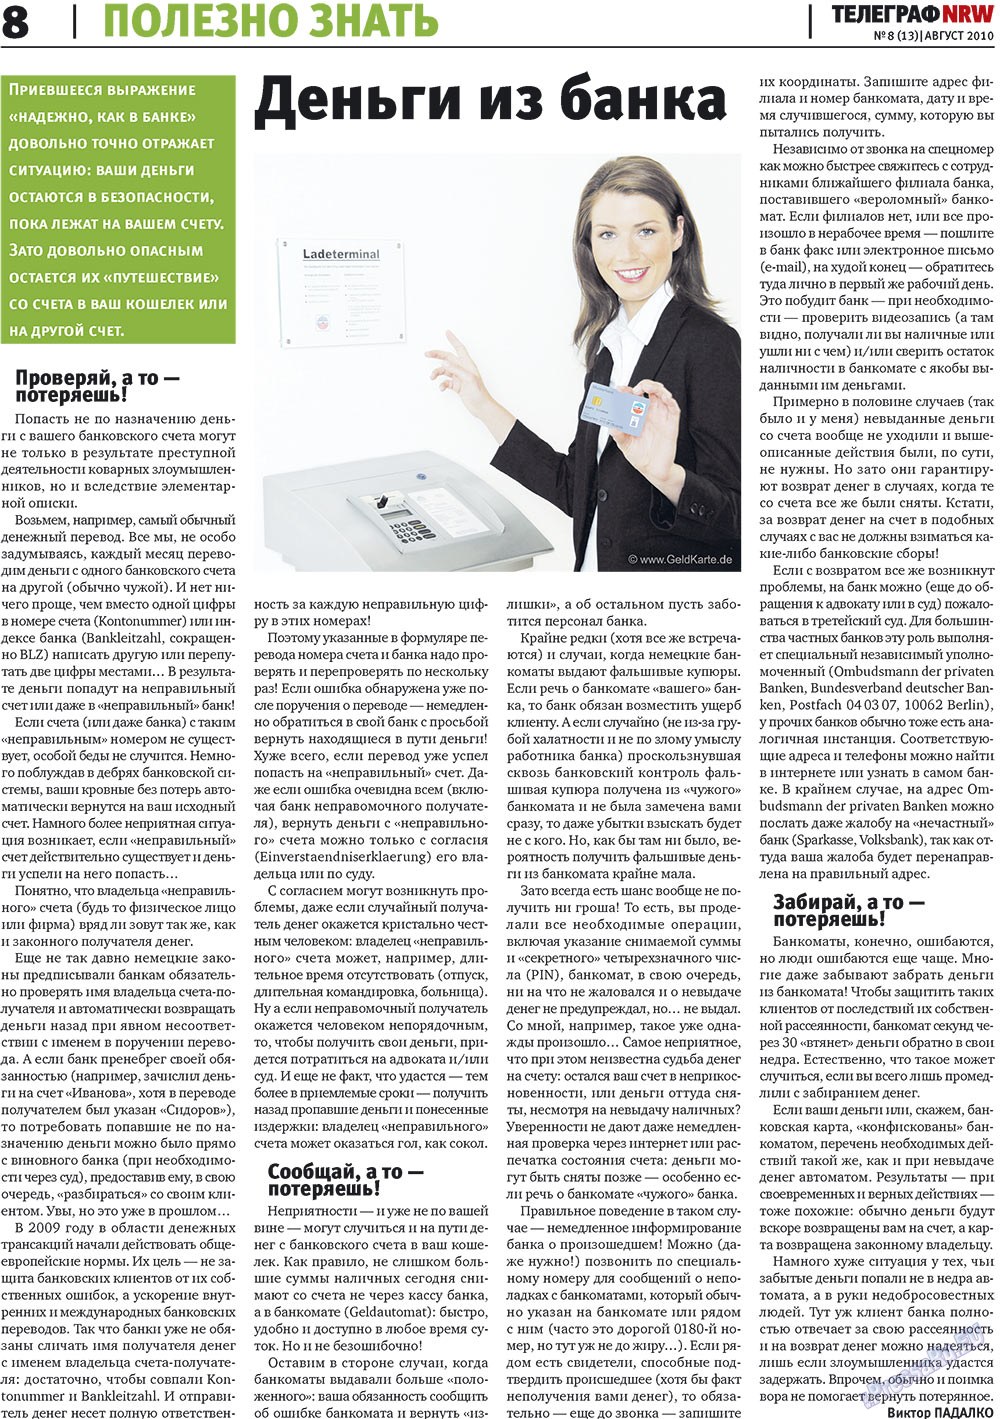 Телеграф NRW, газета. 2010 №8 стр.8